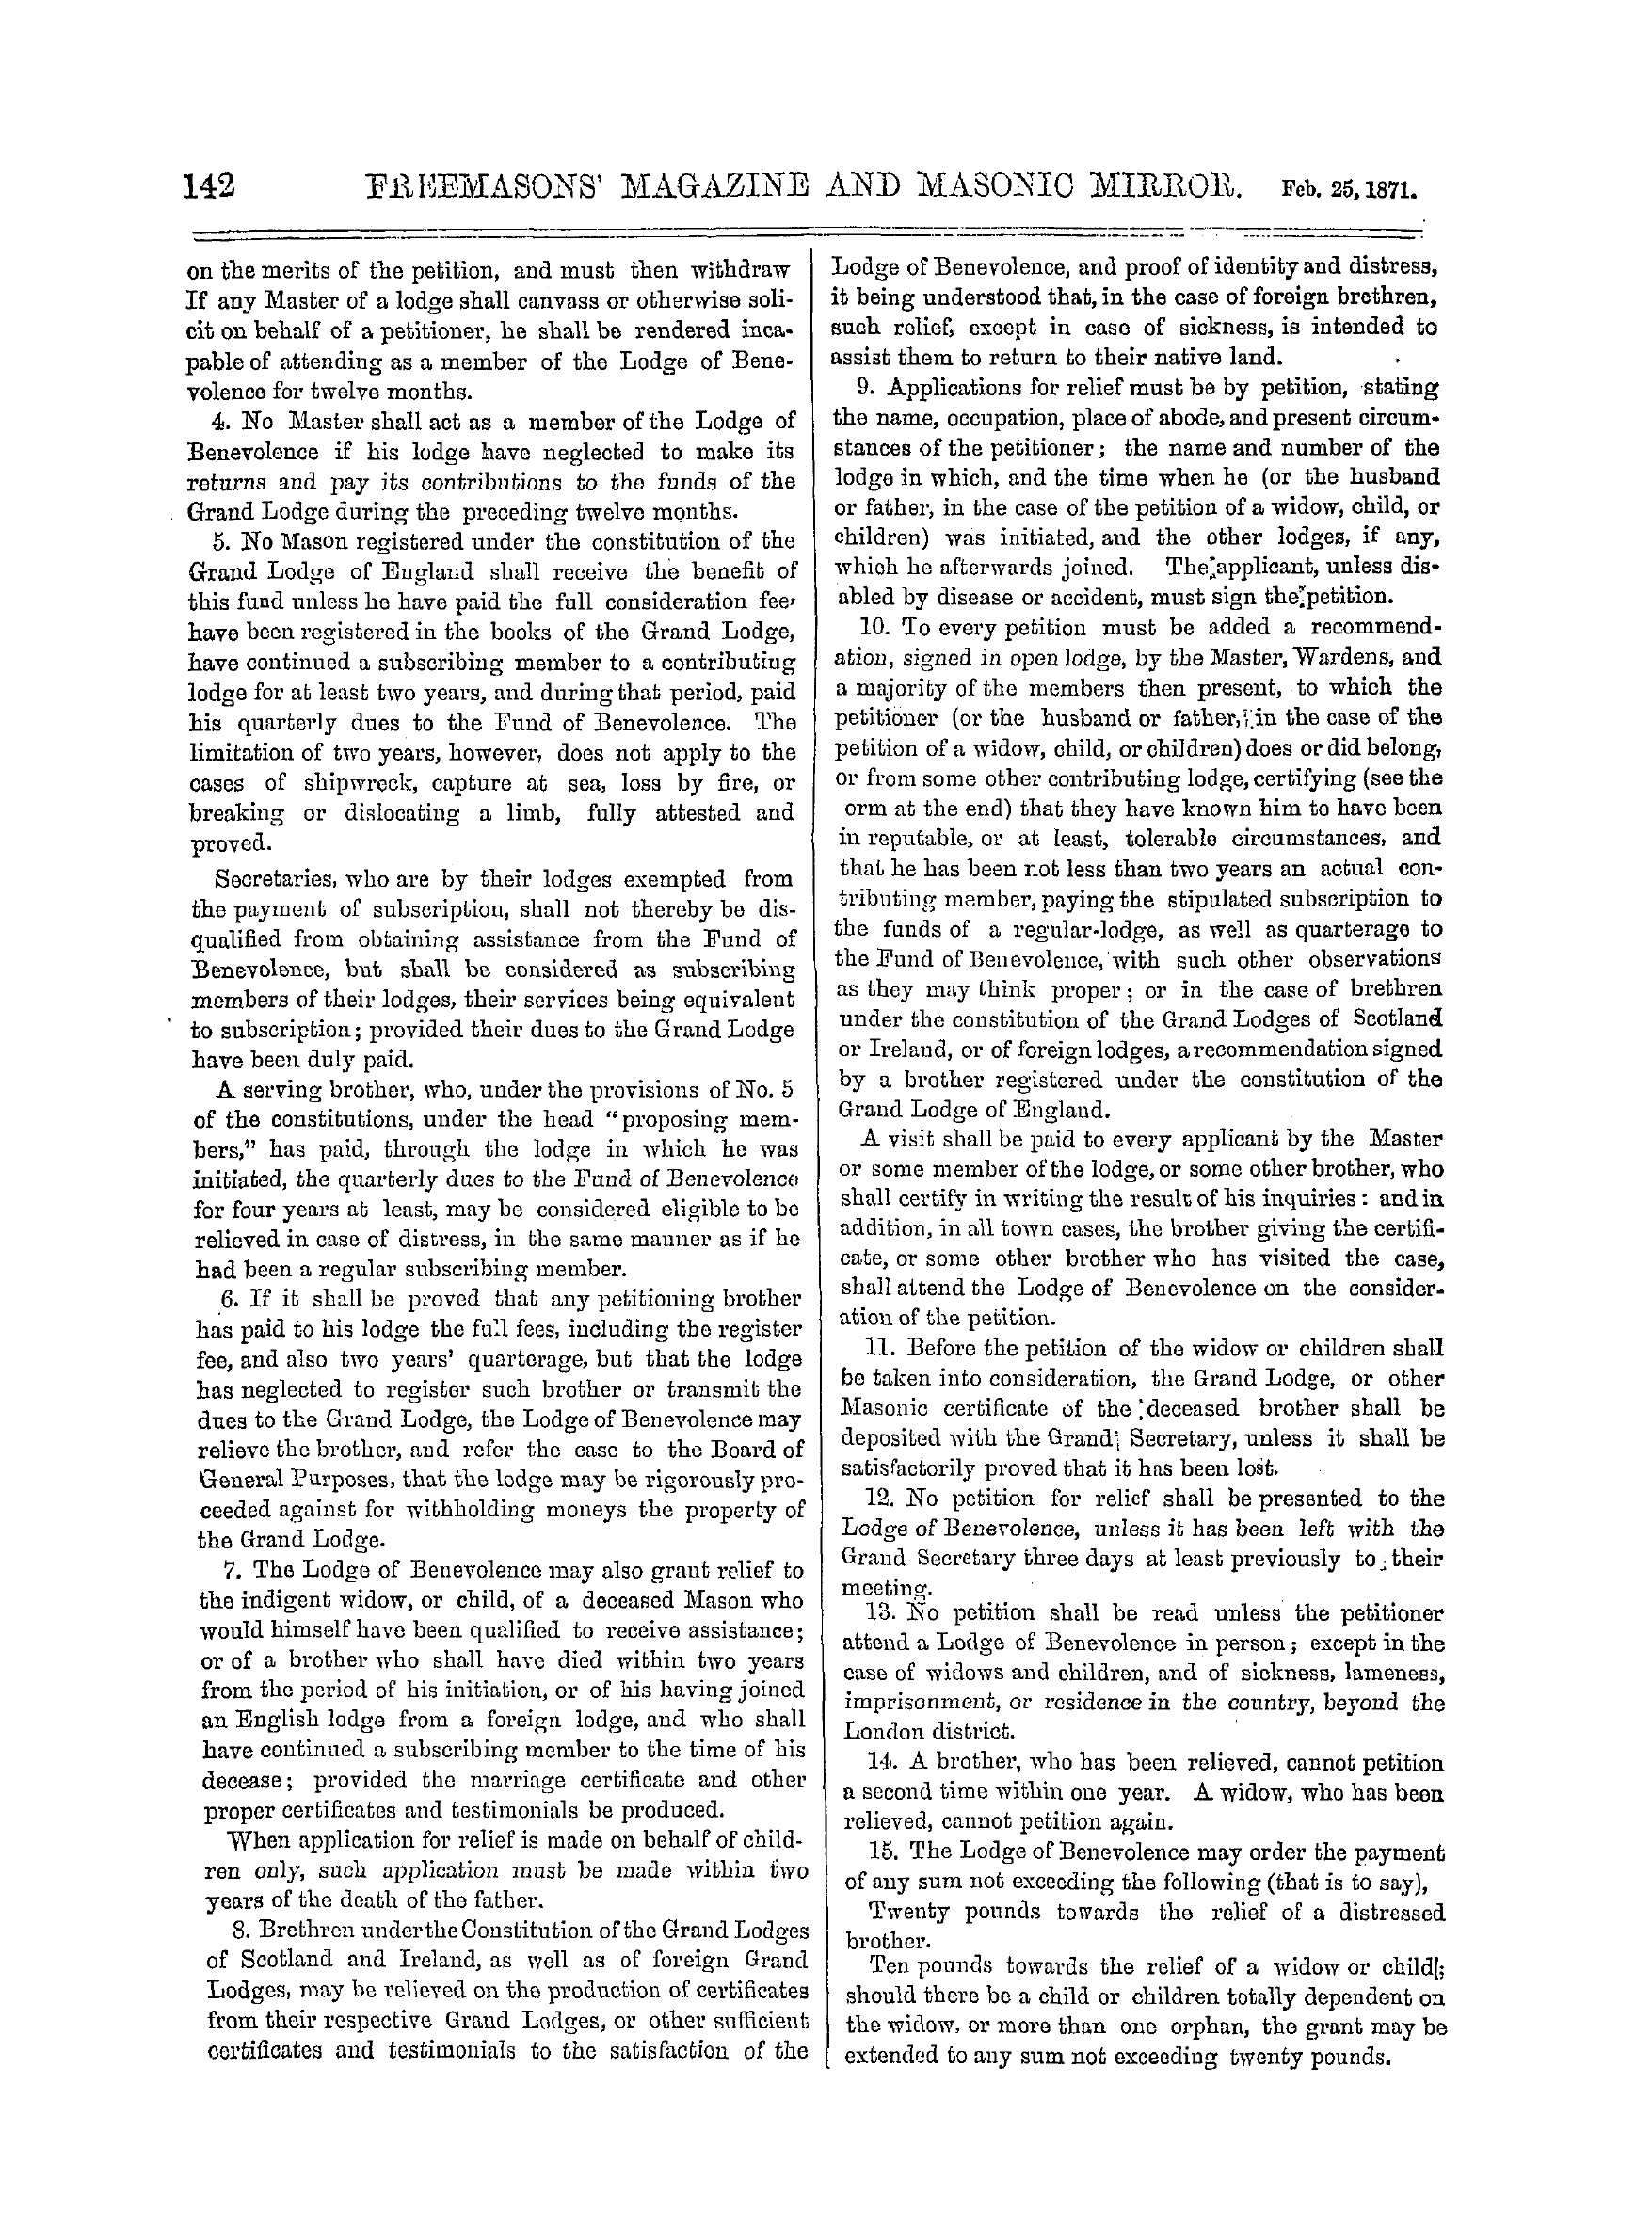 The Freemasons' Monthly Magazine: 1871-02-25 - The Fund Of Benevolence.